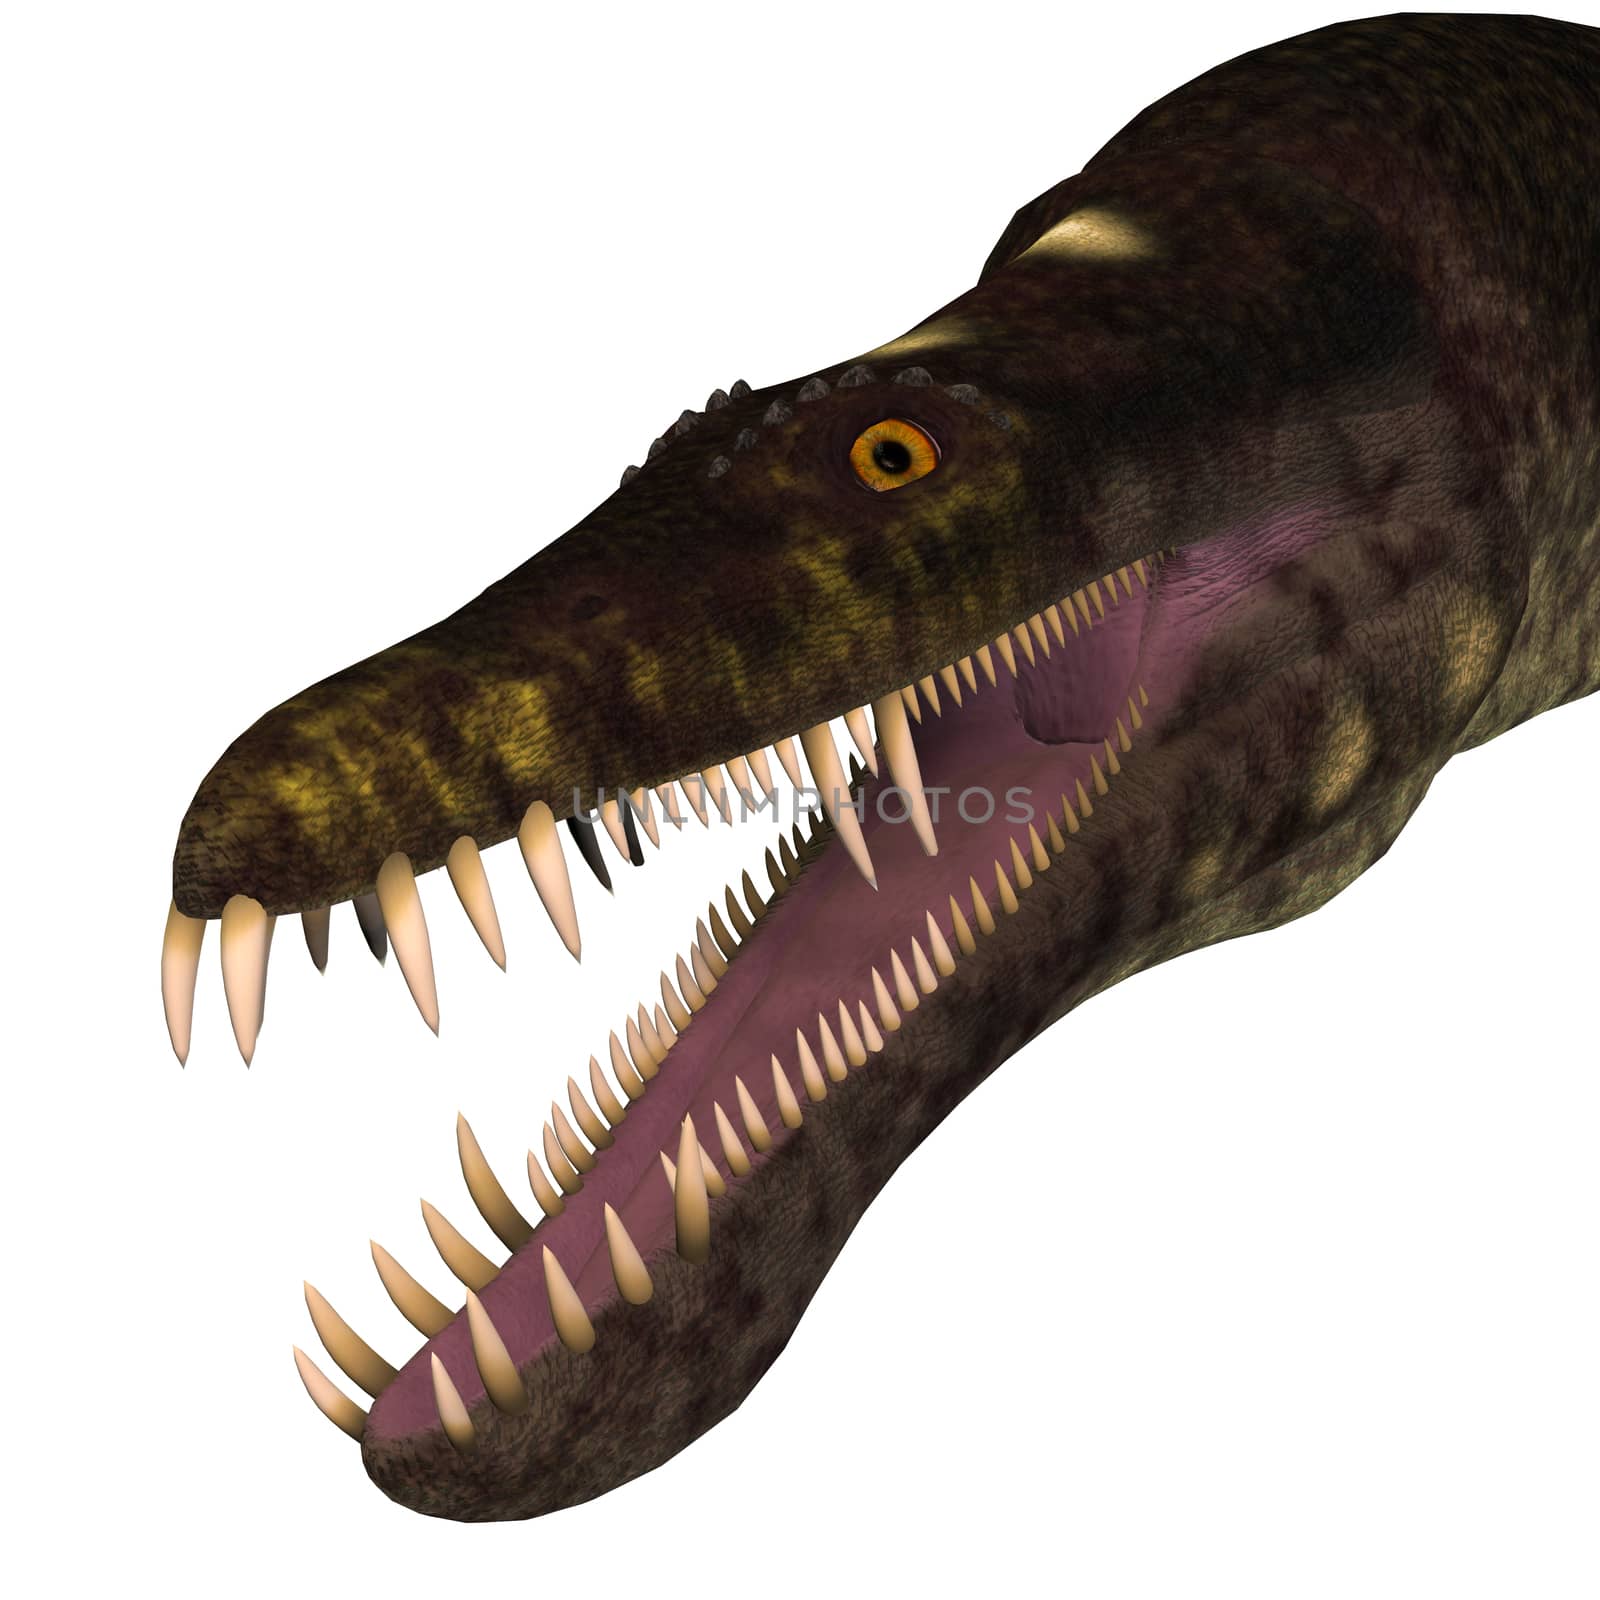 Nothosaurus Dinosaur Head by Catmando